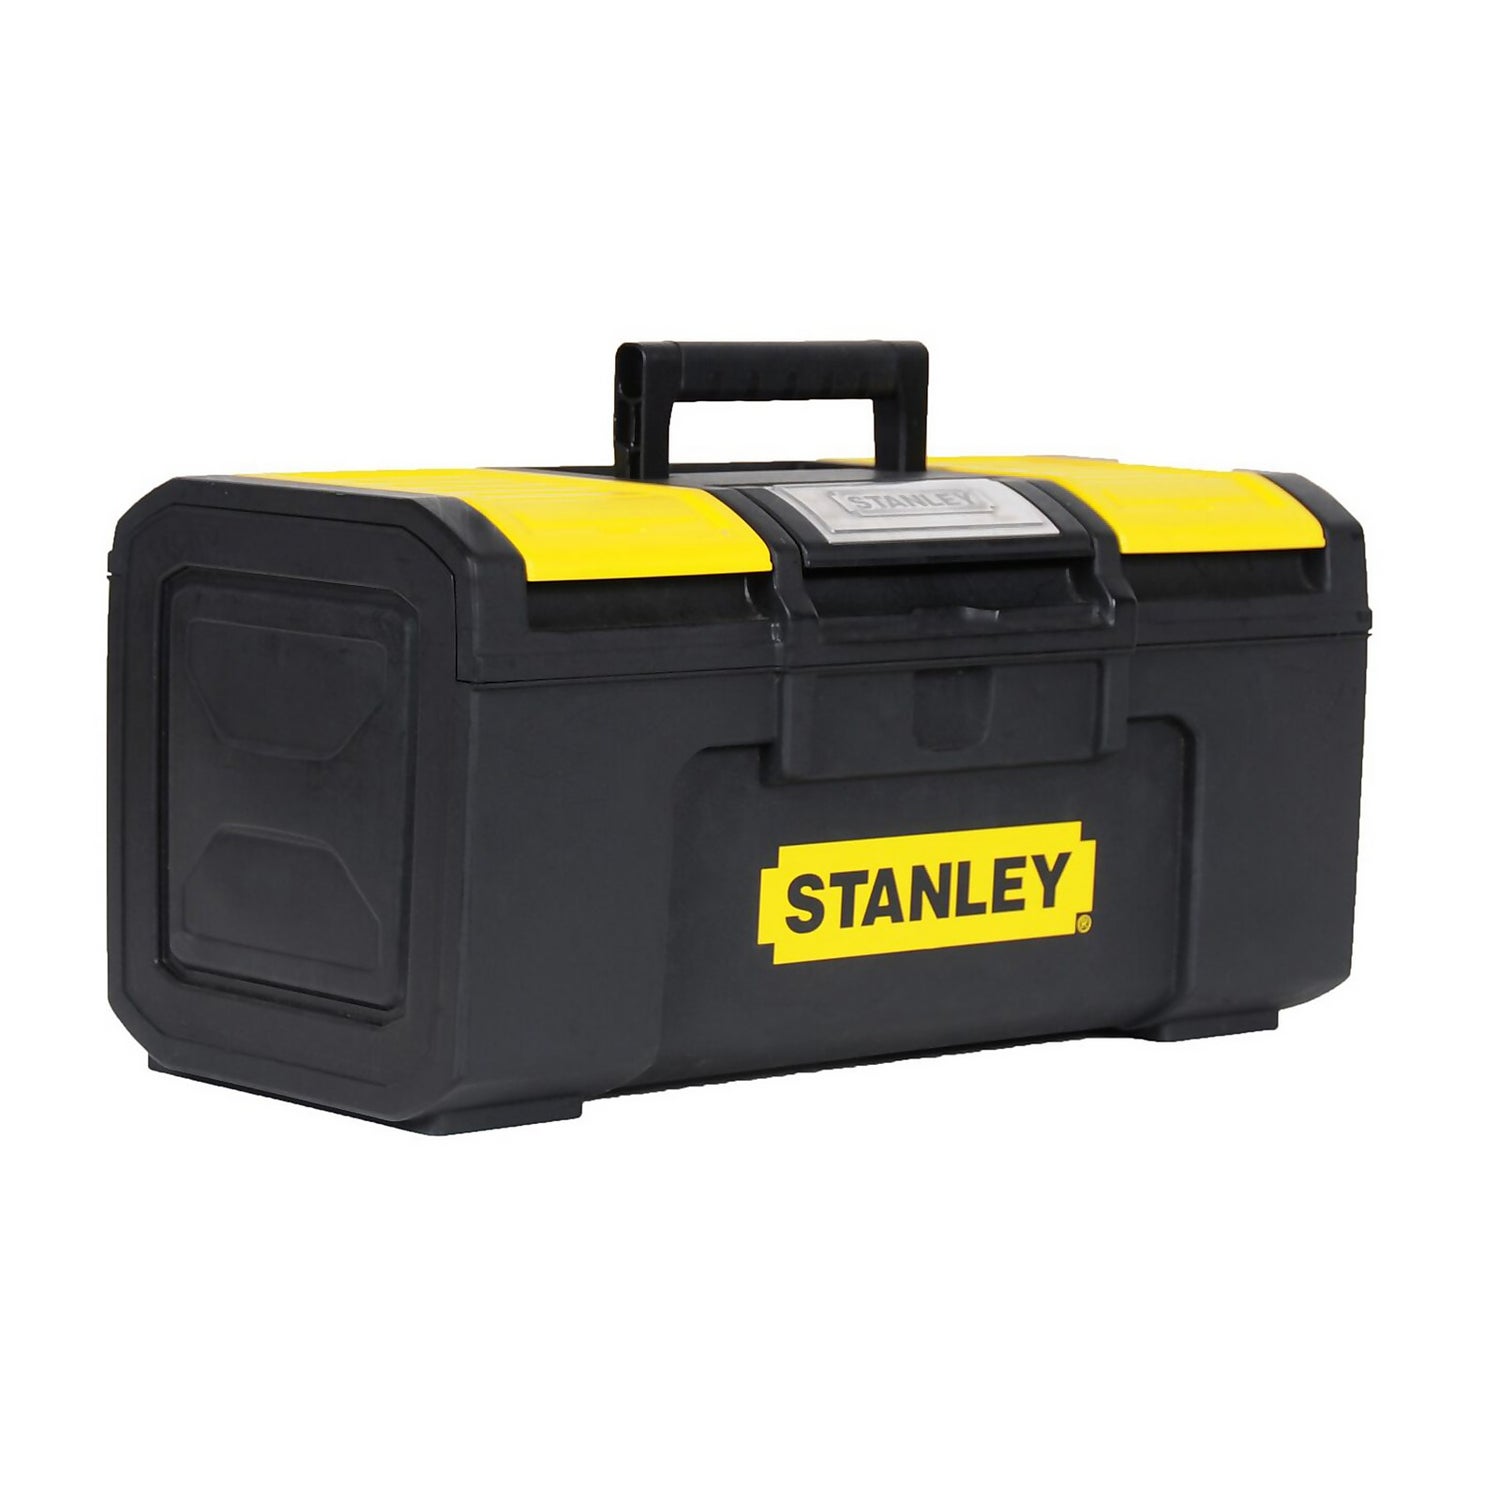 Toolbox 1. Ящик для инструментов Stanley 19 toolboks. Ящик для инструмента Stanley line Toolbox 16" 1-79-216 [1-79-216]. Ящик Stanley 1-79-216. Ящик для инструментов Stanley BASICTOOLBOX 19" (1-79-217).